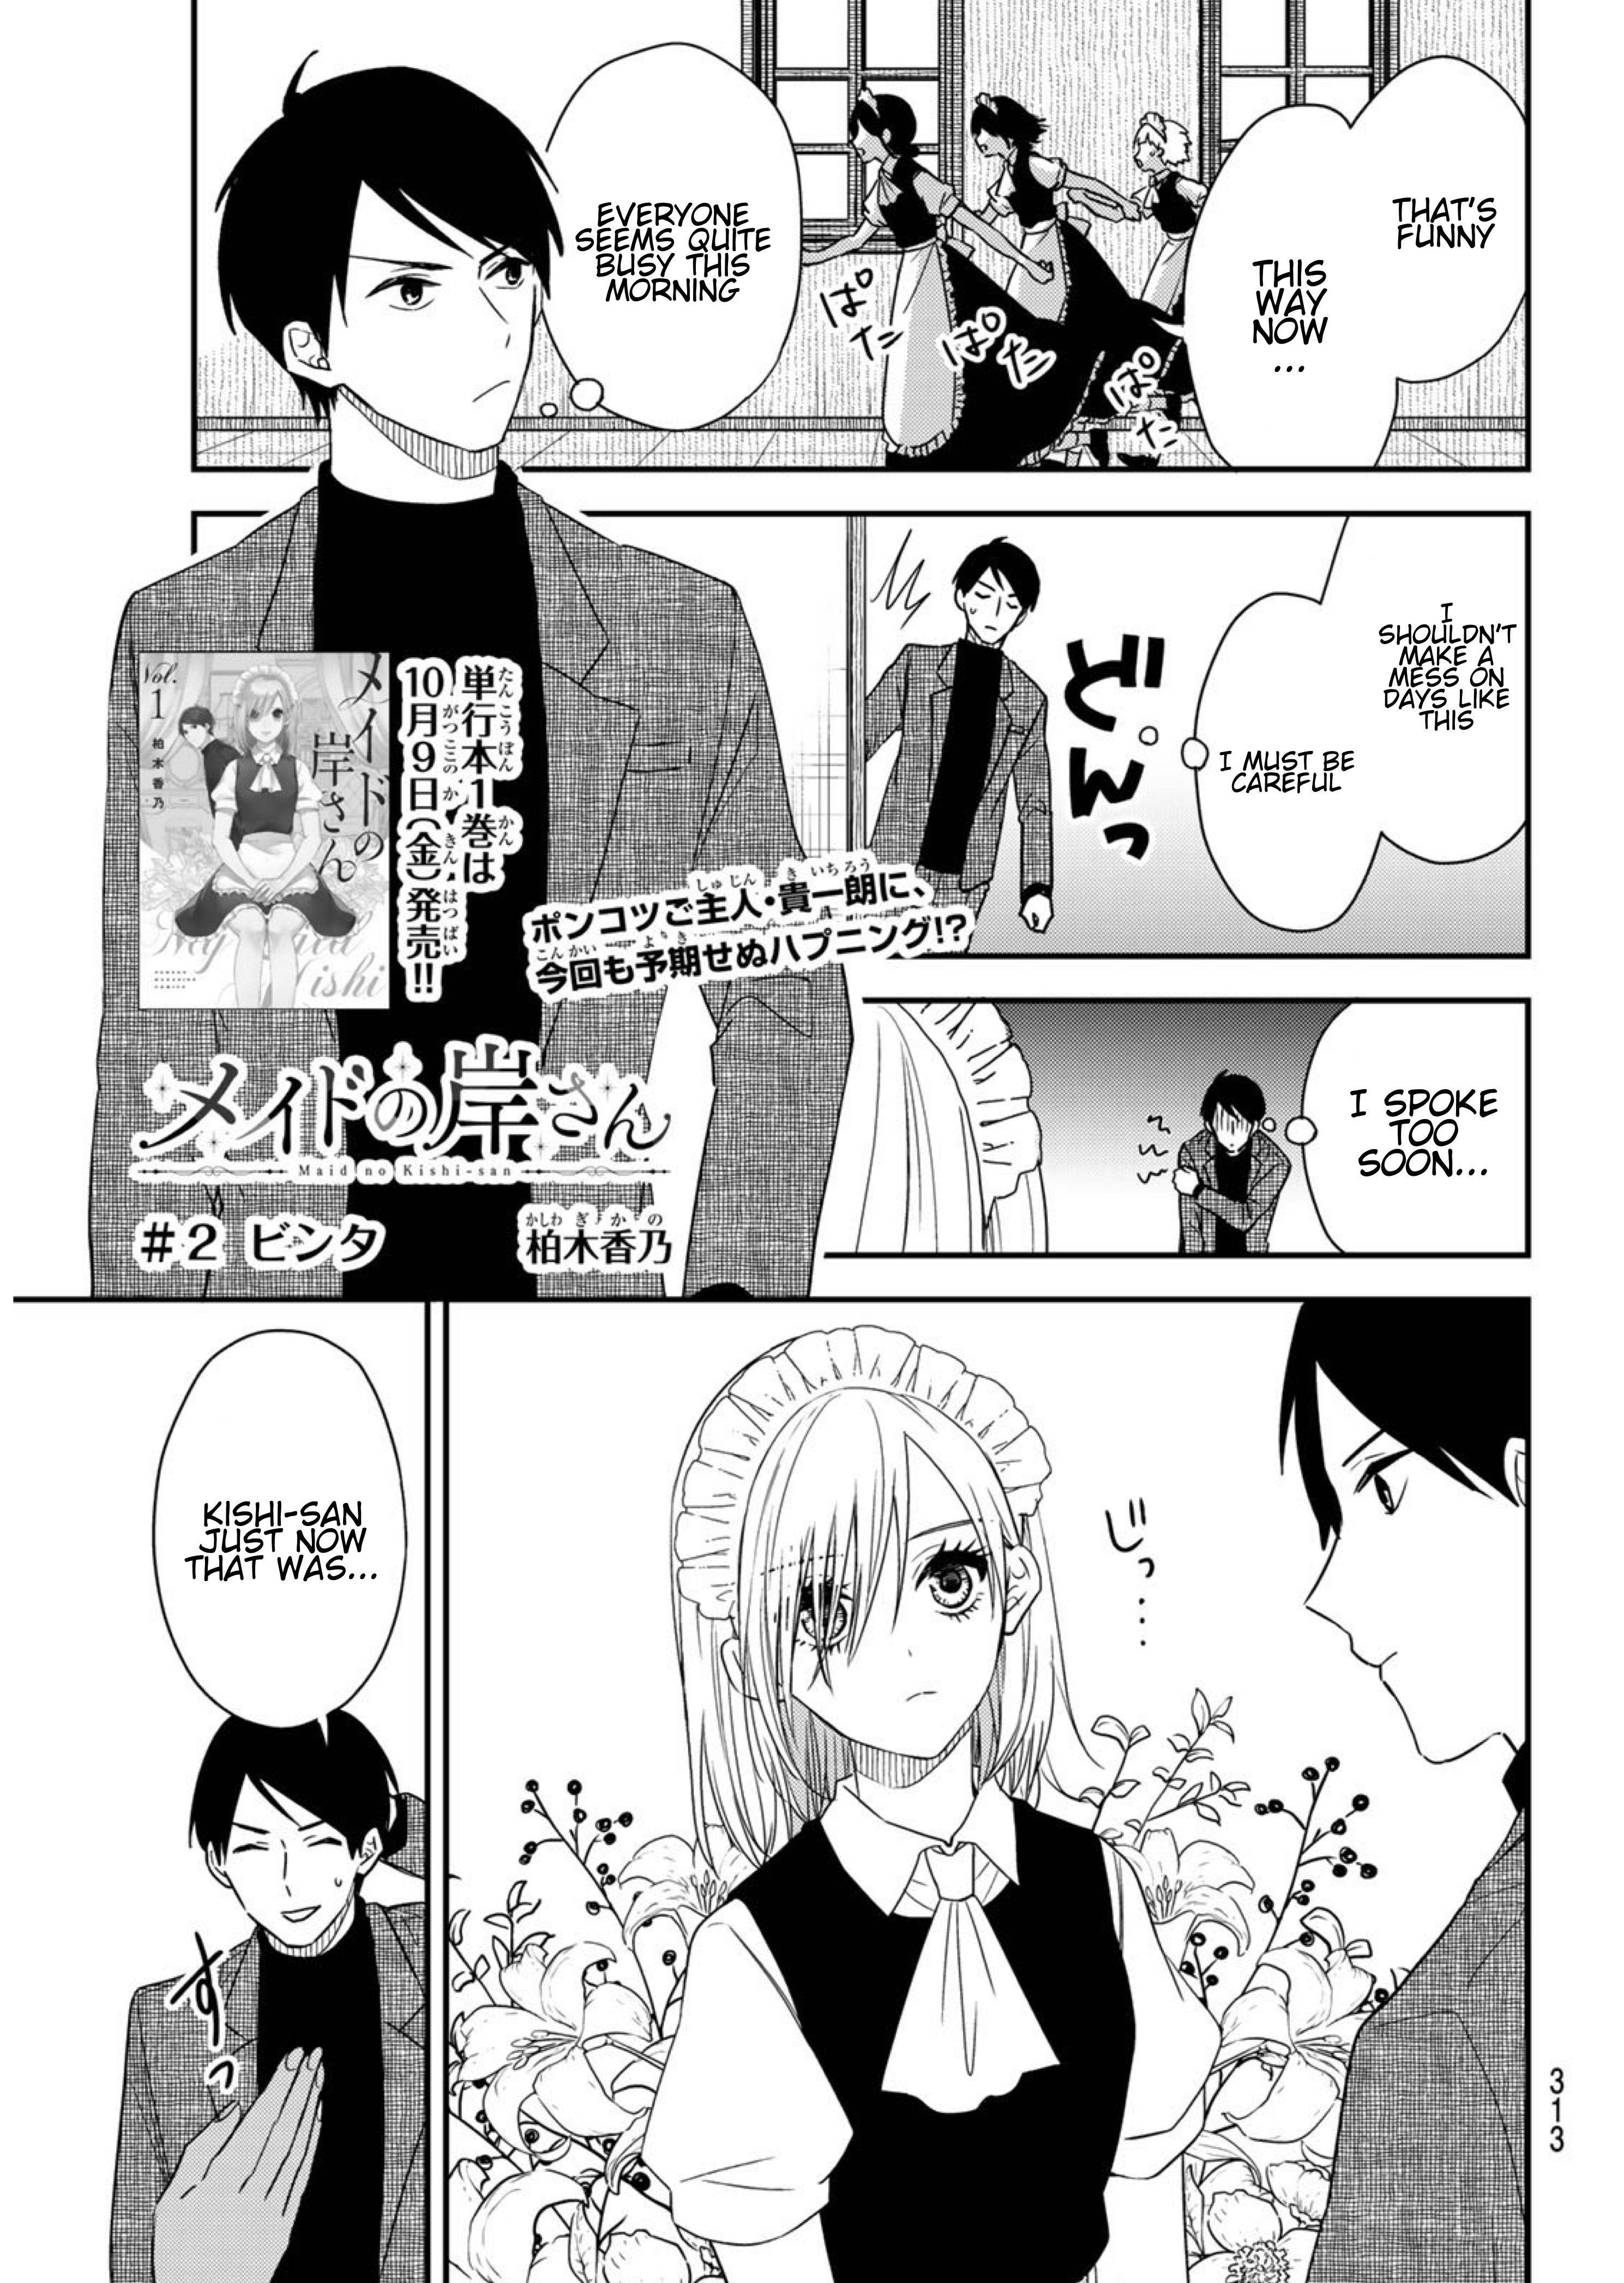 Maid no Kishi-san - chapter 47.1 - #2